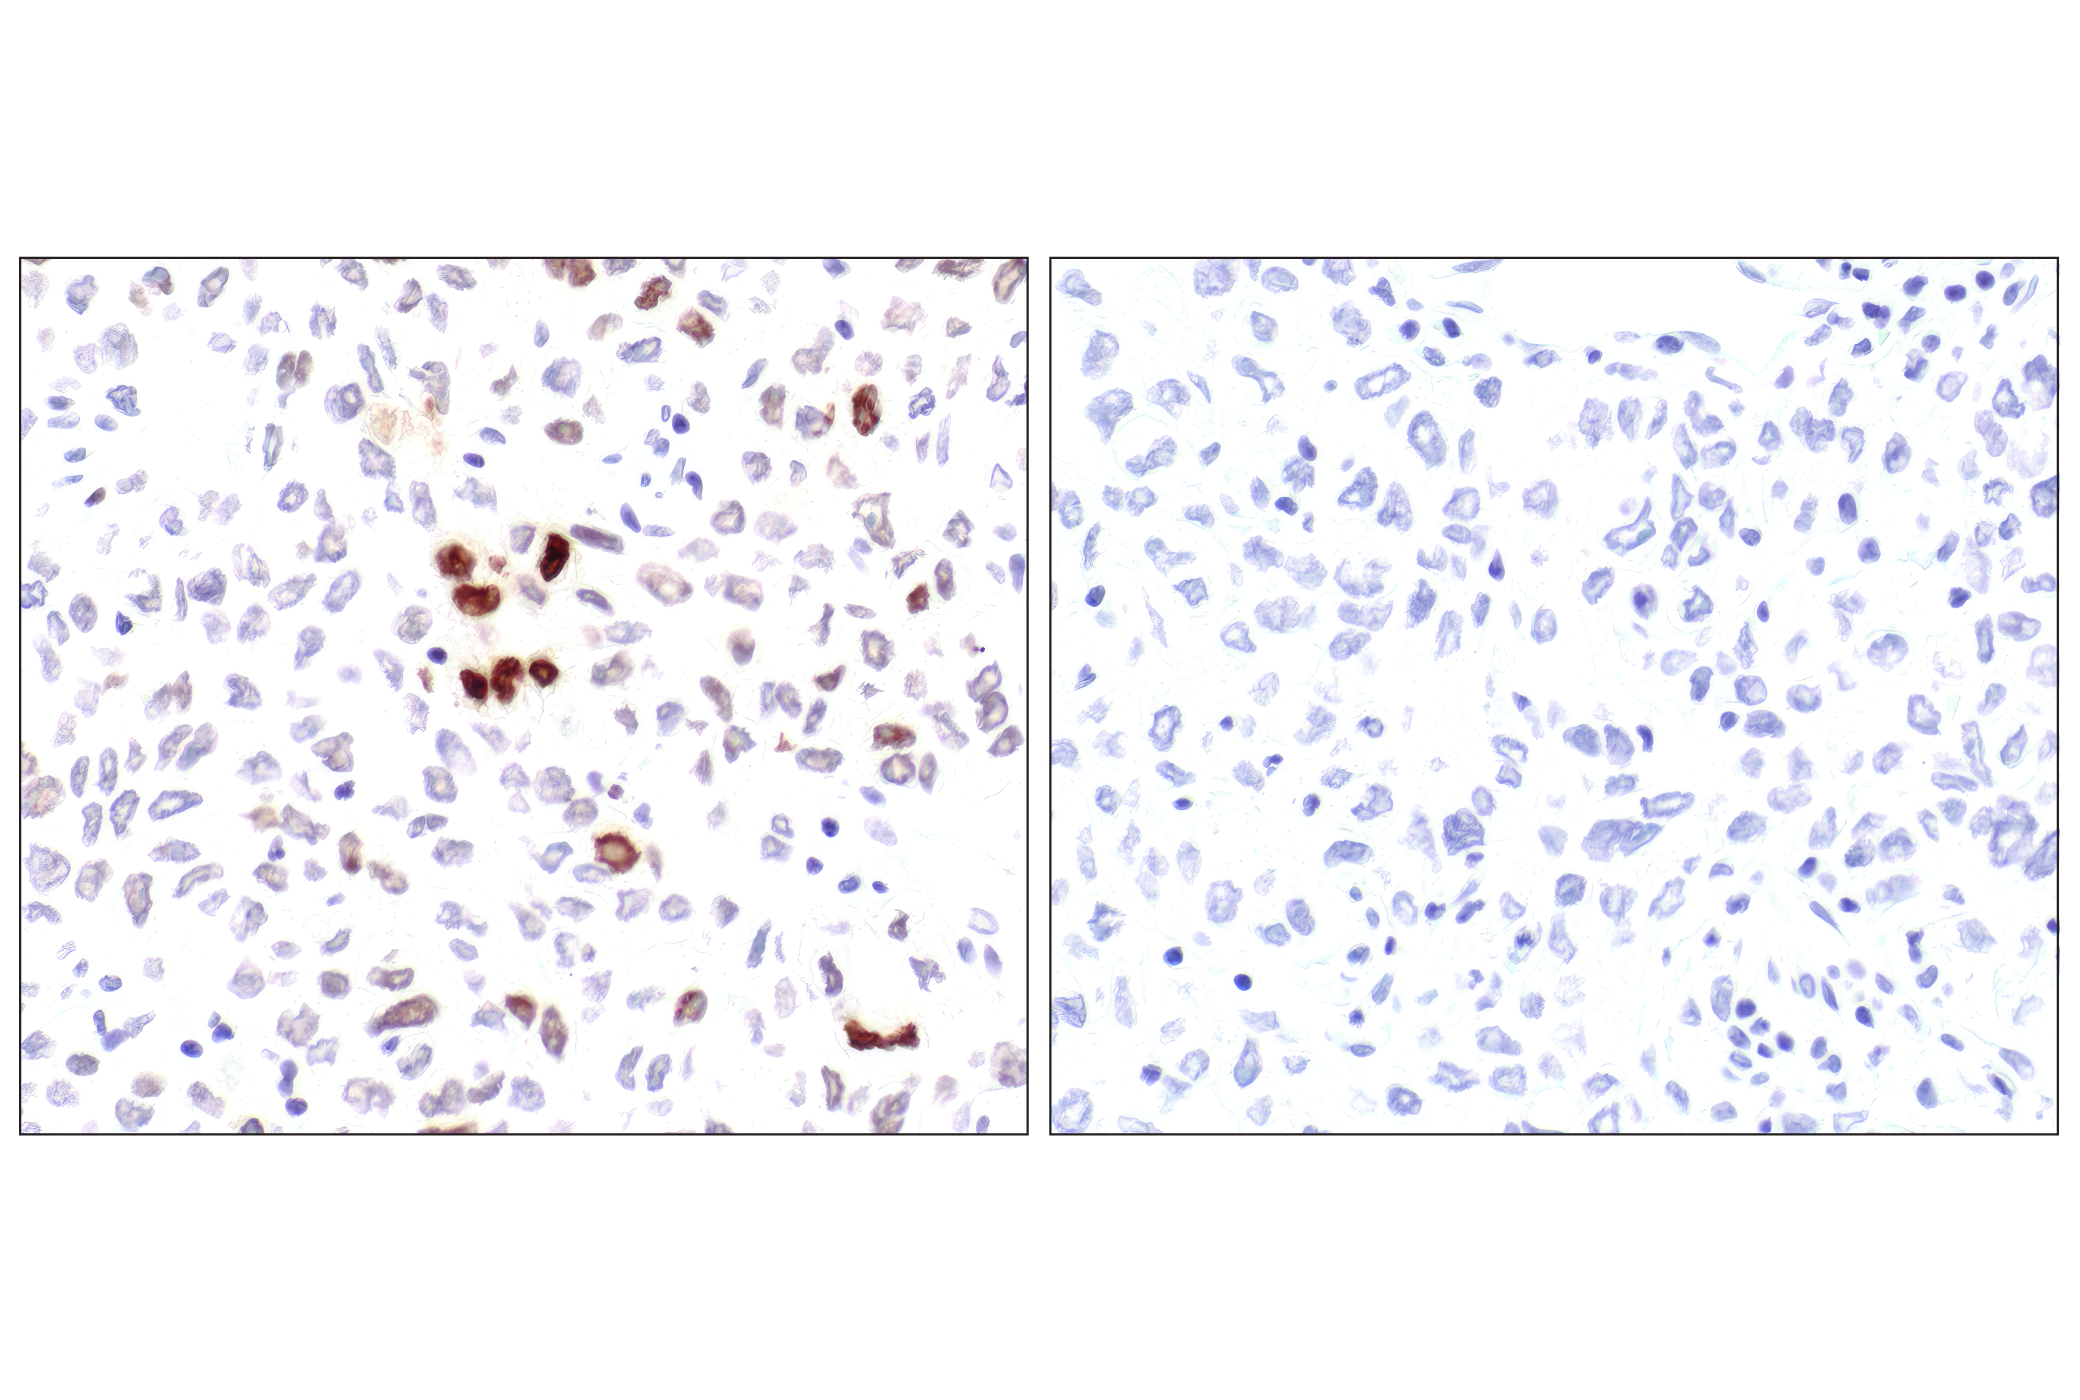  Image 12: PhosphoPlus® Histone H2A.X (Ser139) Antibody Duet